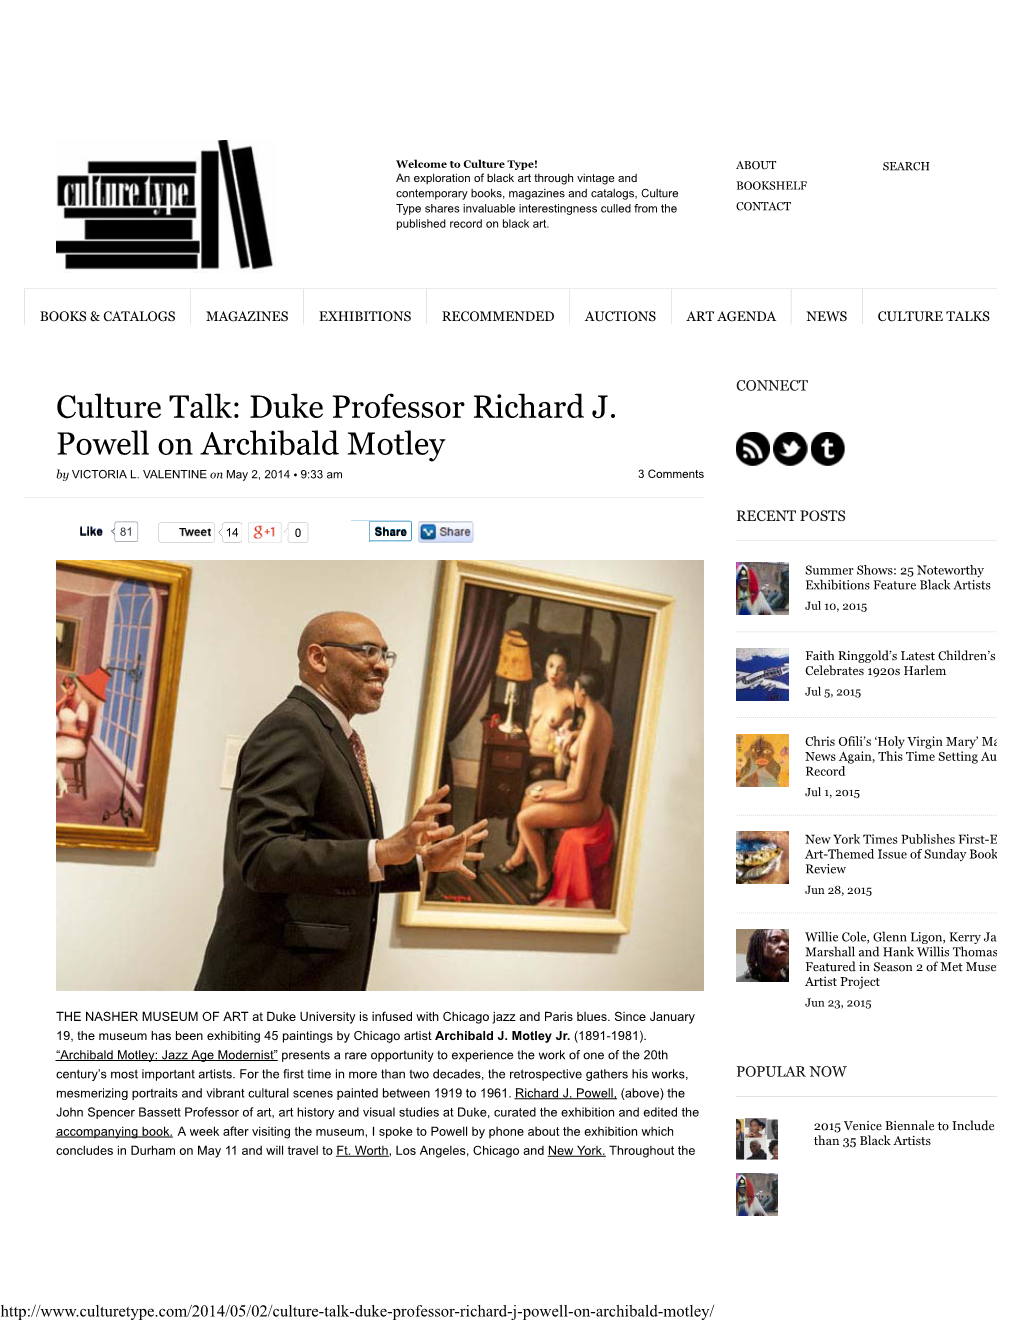 Culture Talk: Duke Professor Richard J. Powell on Archibald Motley